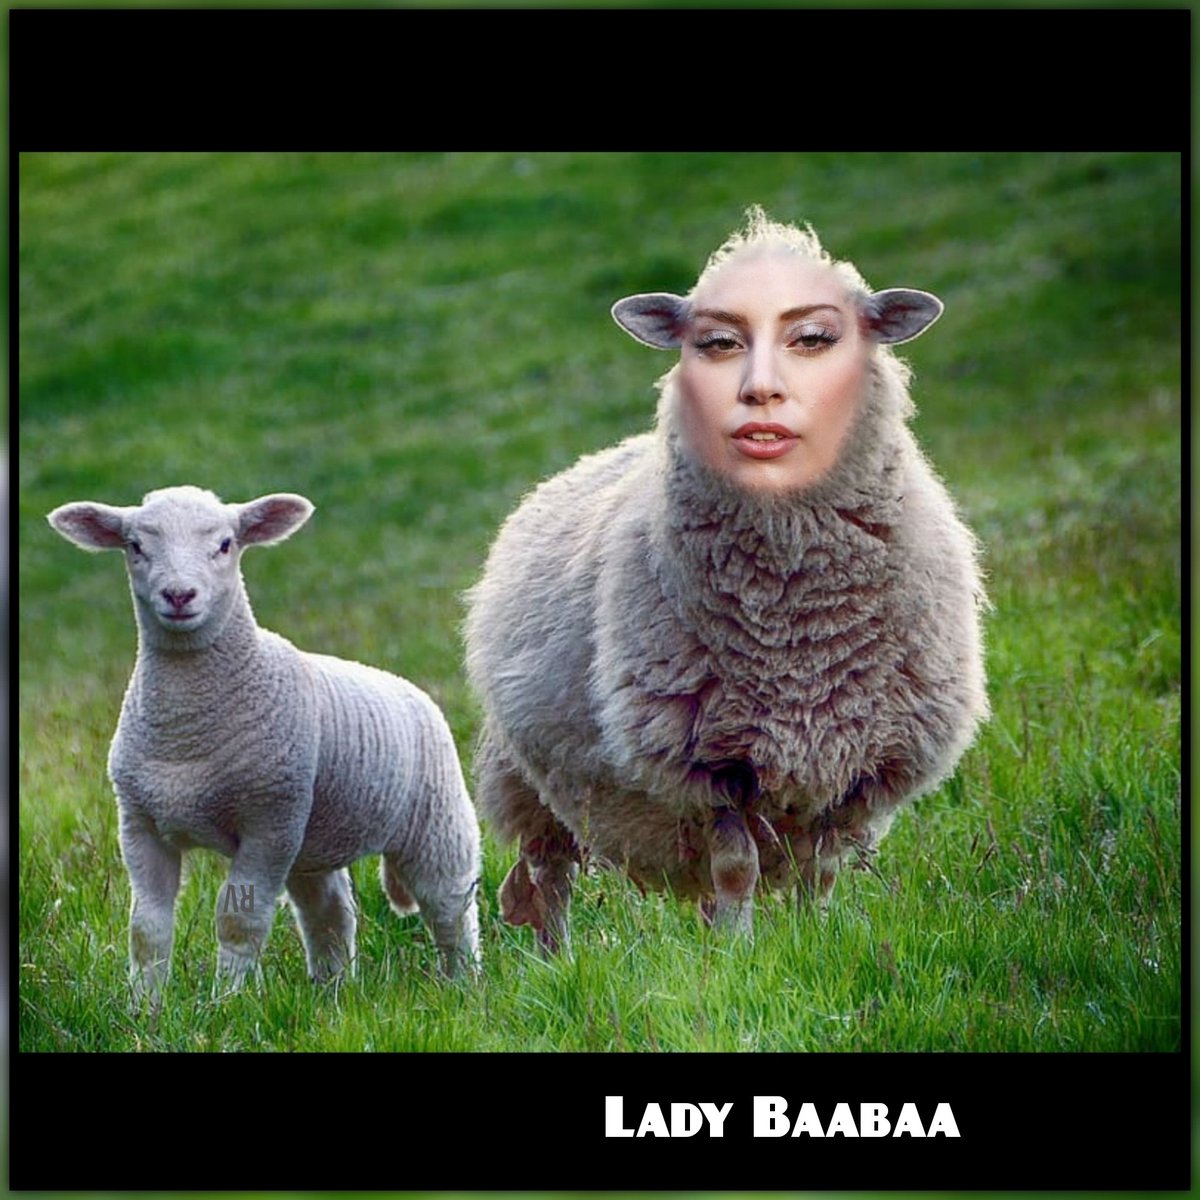 🌱🏔🎶🐑🎶🏔🌱
#ladygaga #ladybaabaa #baabaablacksheep #sexy #sheep #baabaa #animals #lol #funny #memes #nfts #art #comedian #vogtcollection #vogtart #comedy #smilemore #mashup #TV #laugh #viral #fyp #movies #actor #grass #smile #singer #songwriter #actress